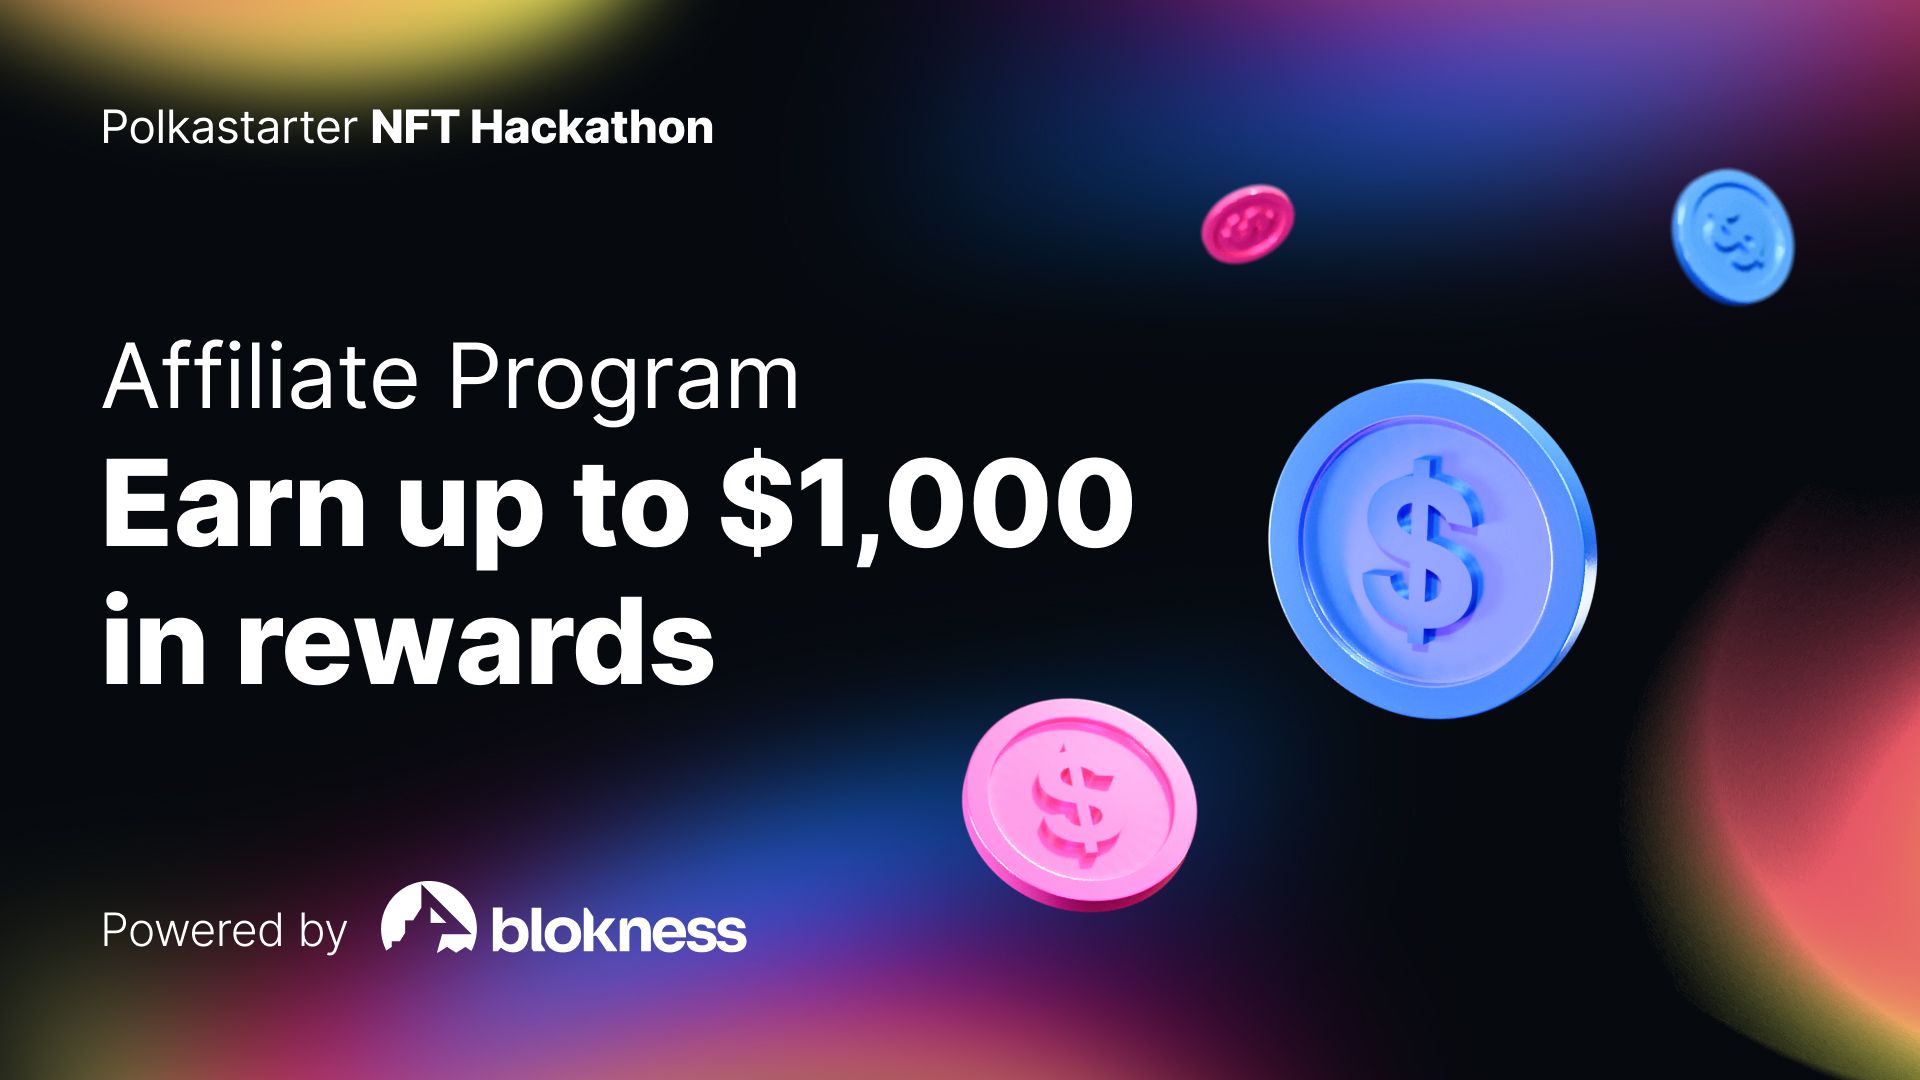 Invite developers to Polkastarter NFT Hackathon and earn up to $1,000 in rewards